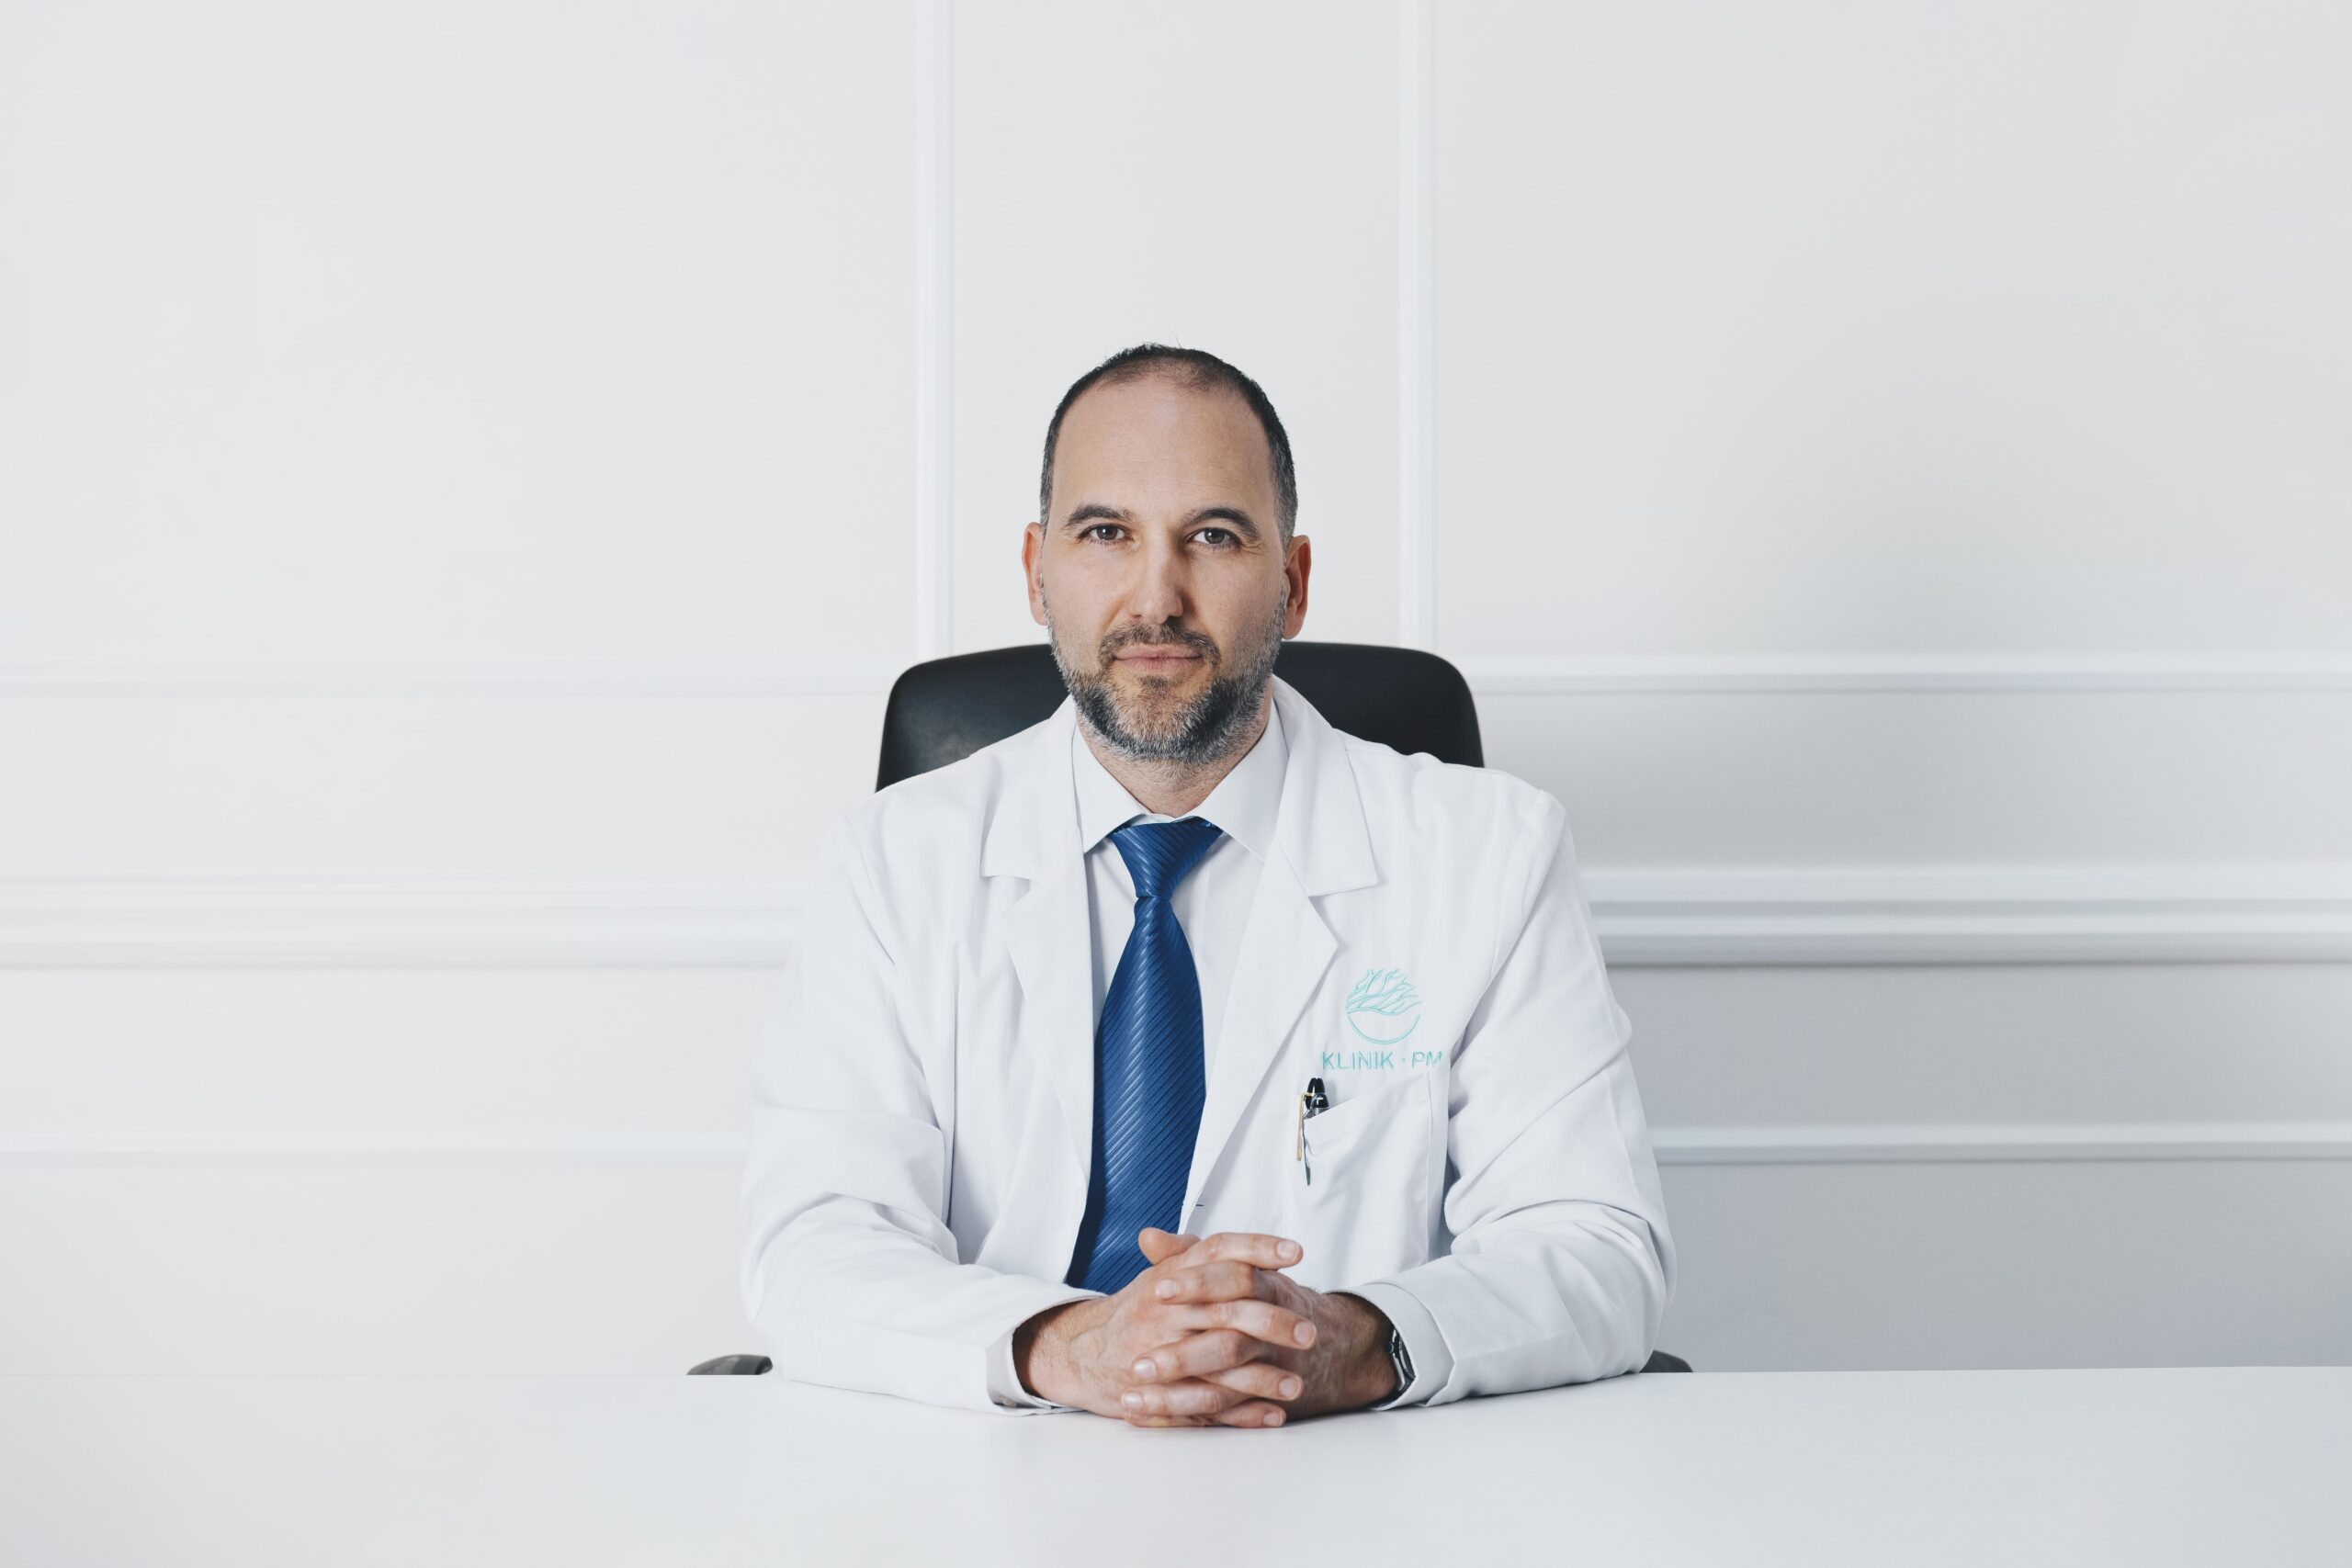 Médico Traumatólogo en Alicante - Dr. Pablo Martínez | KLINIK PM